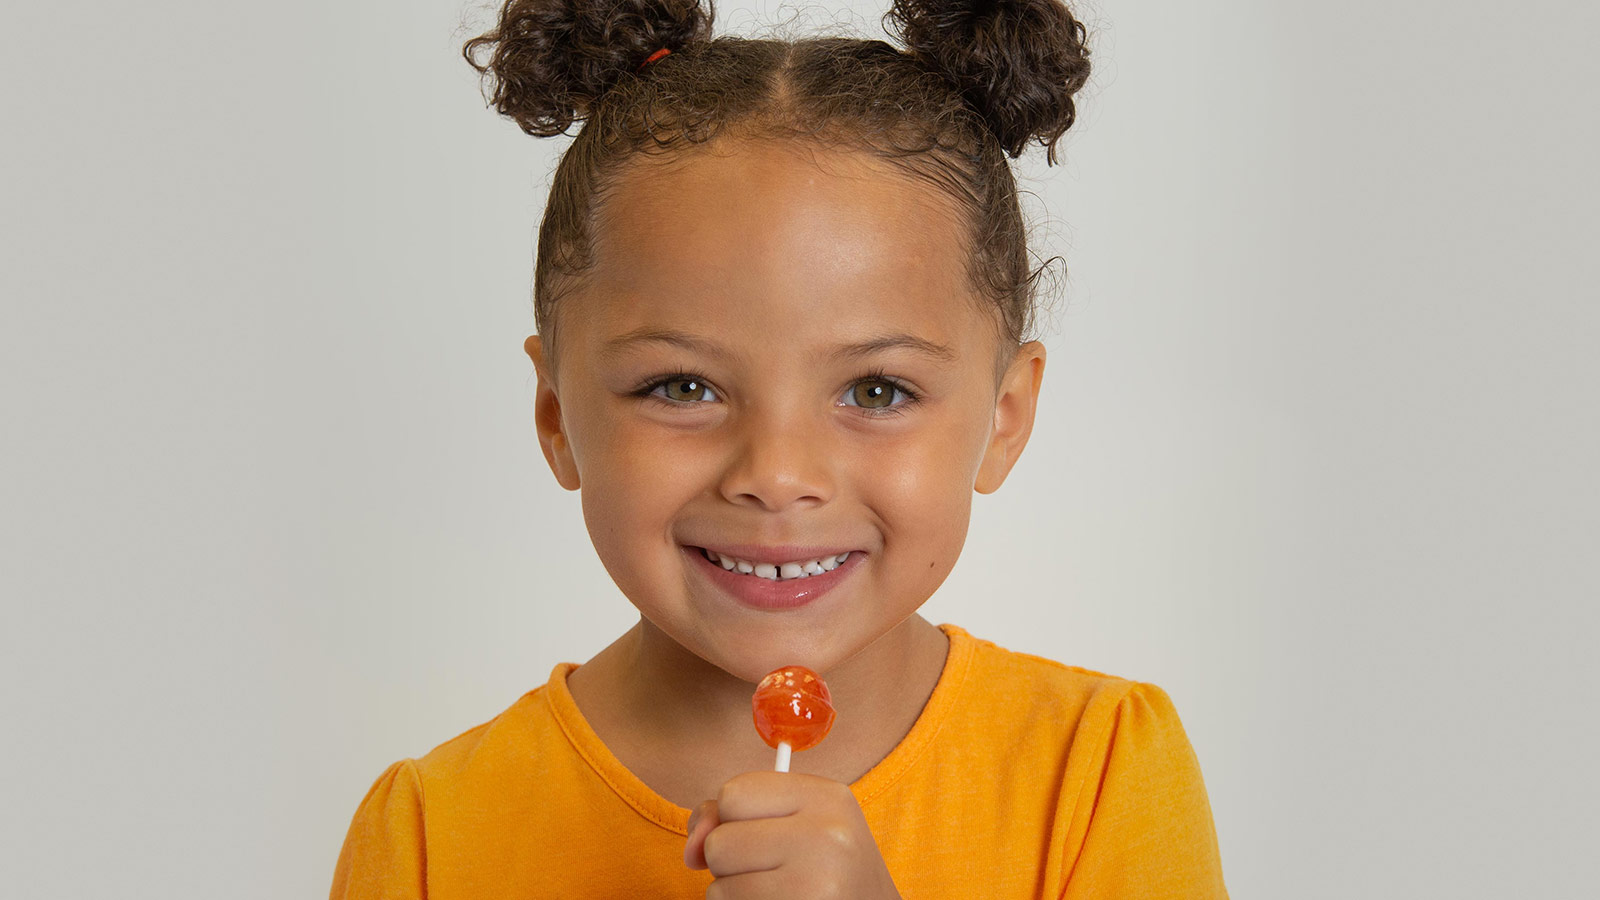 A little girl holds an orange lollipop